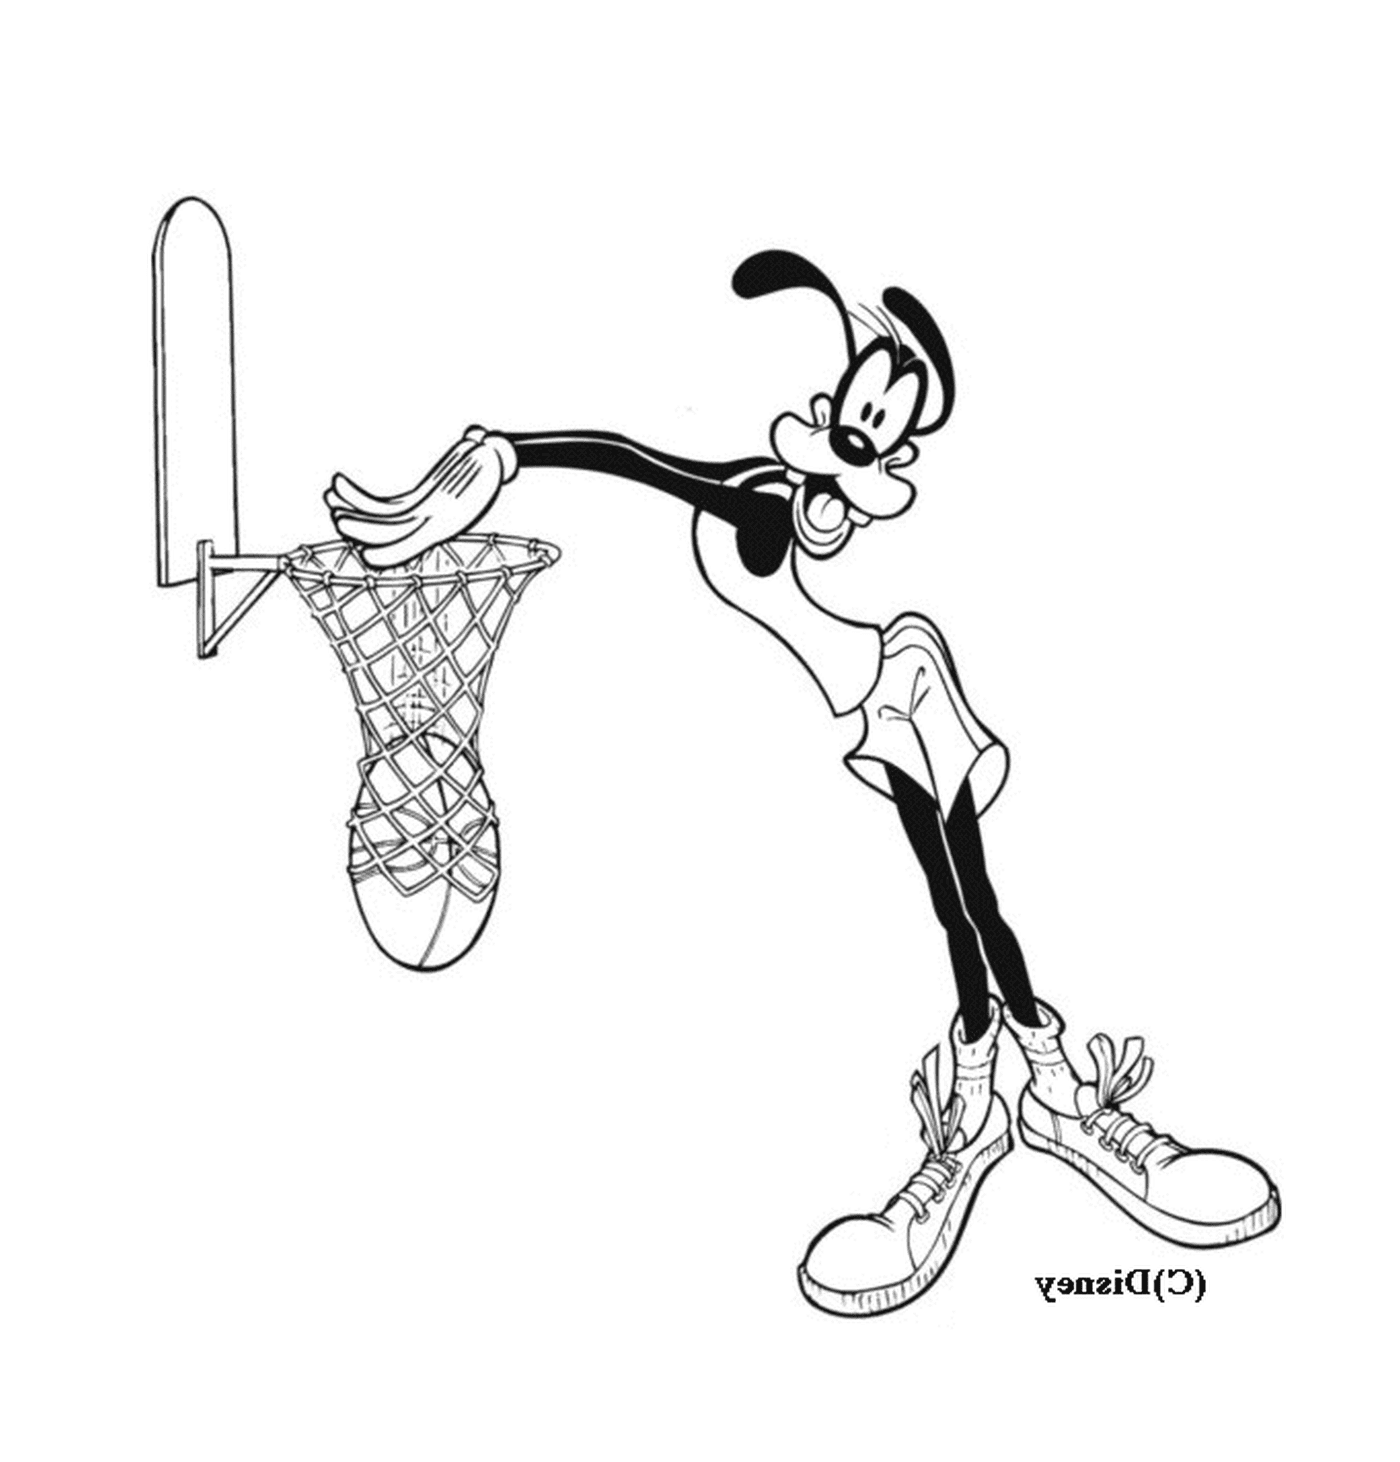  Dingo plays basketball in a cartoon 